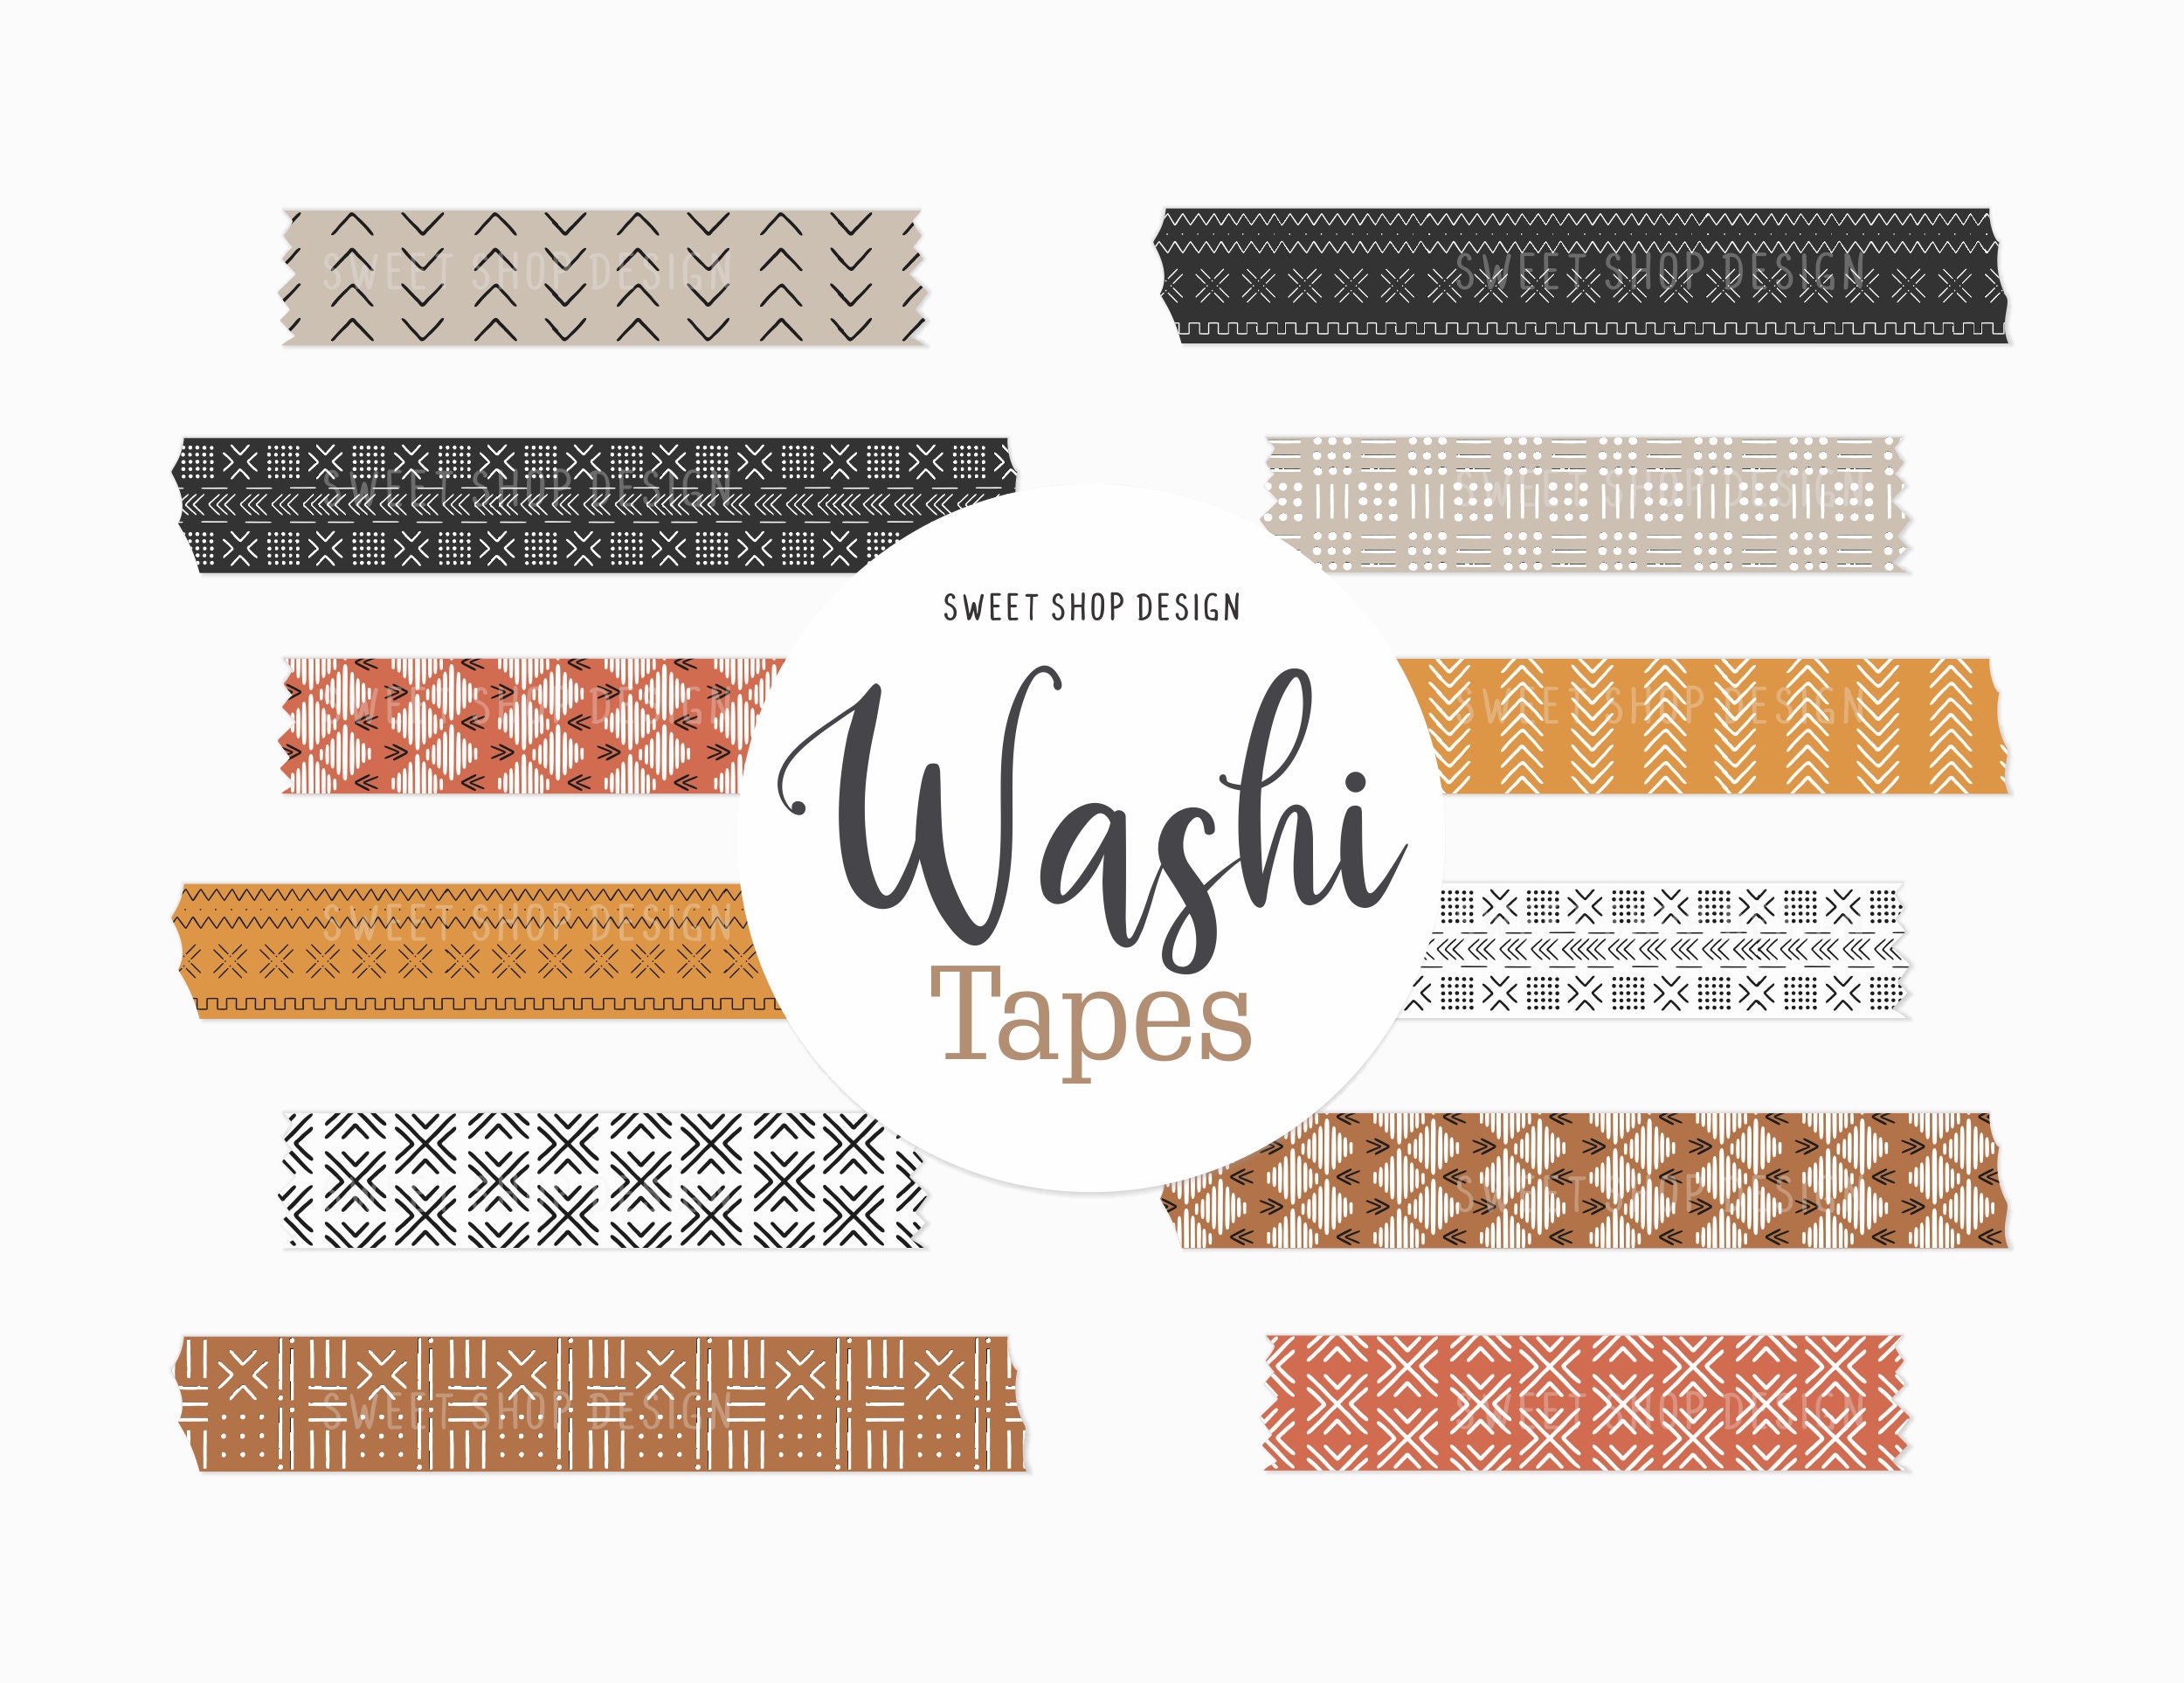 Digital Washi Tape Clipart NEUTRAL SAFARI, Graphics with Animal Prints,  Safari Prints For Digital Planner, Goodnotes